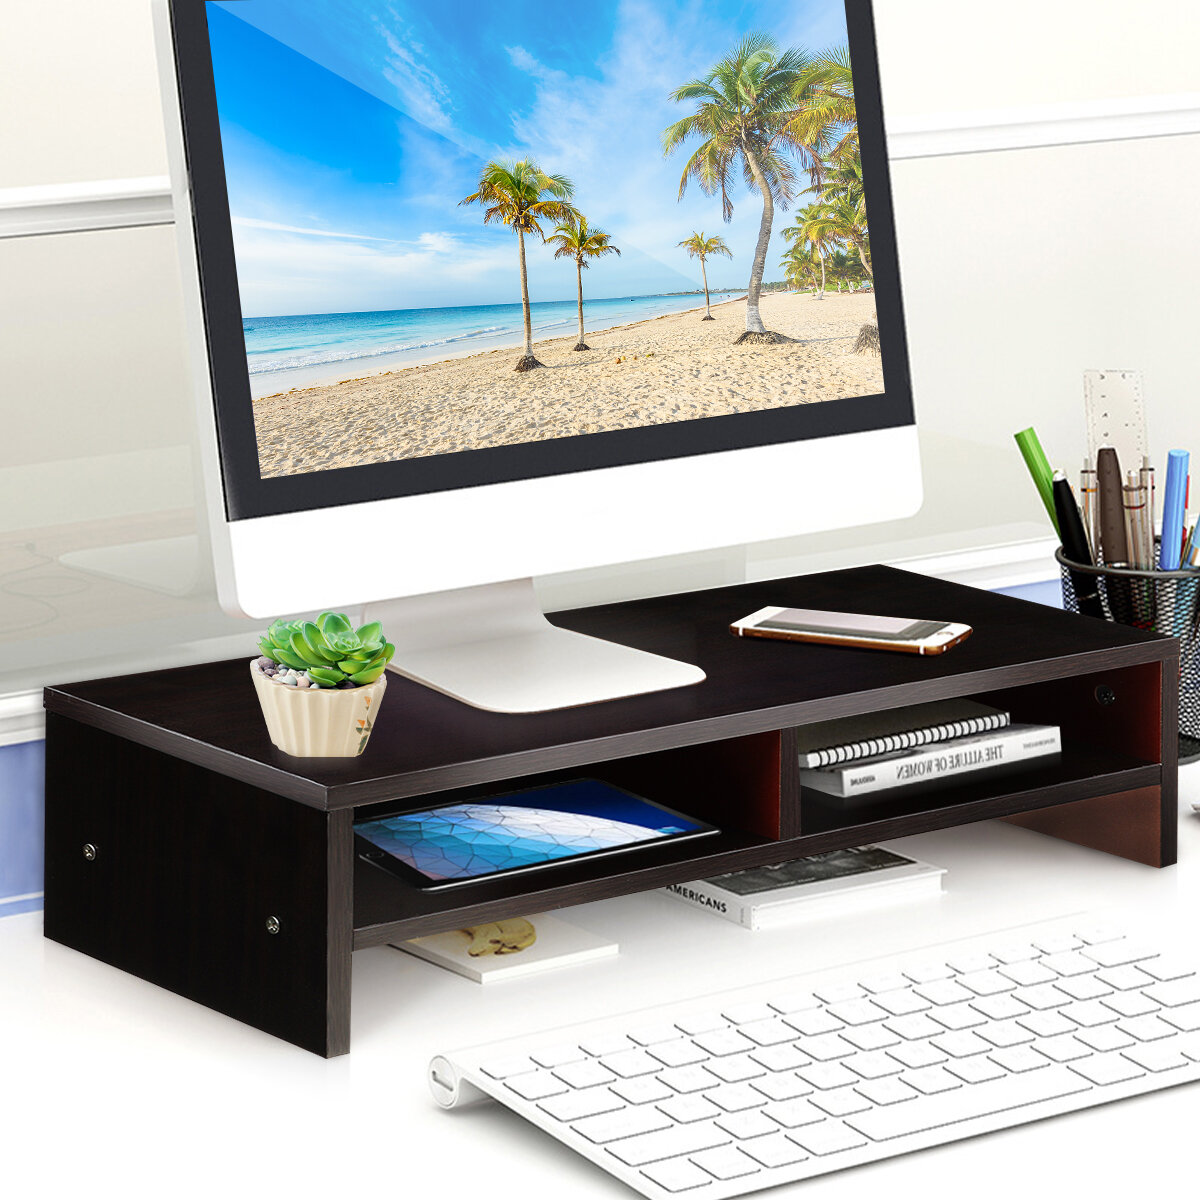 Multifunctional Wooden Monitor Desktop Stand Computer Screen Display Riser for iMac